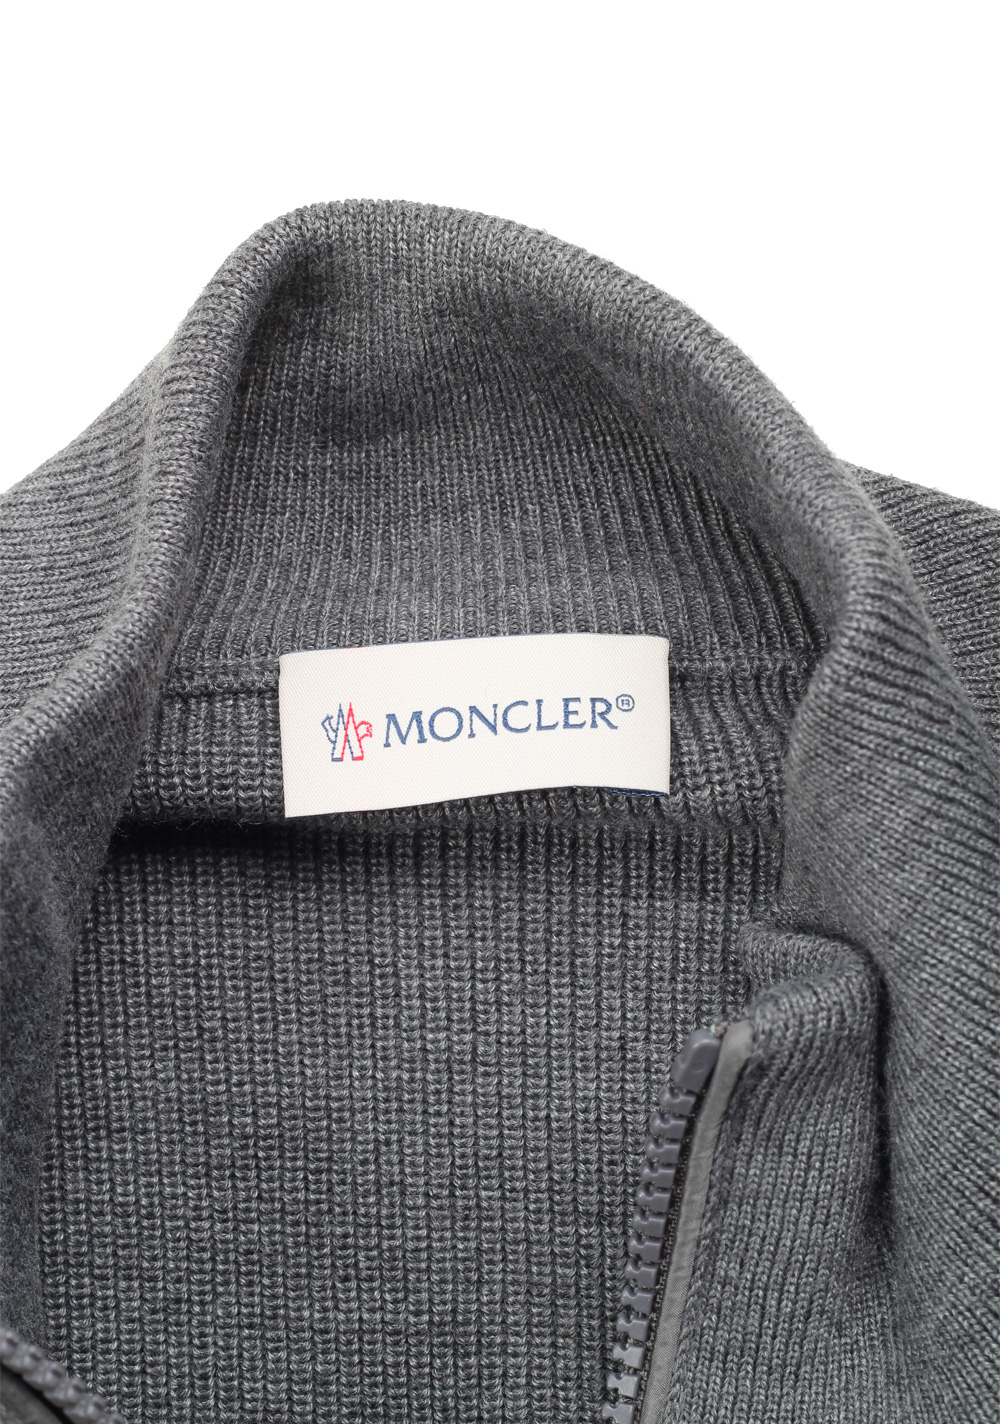 Moncler Gray Maglioni Tricot Cardigan Size XL / 54 / 44 U.S. | Costume ...